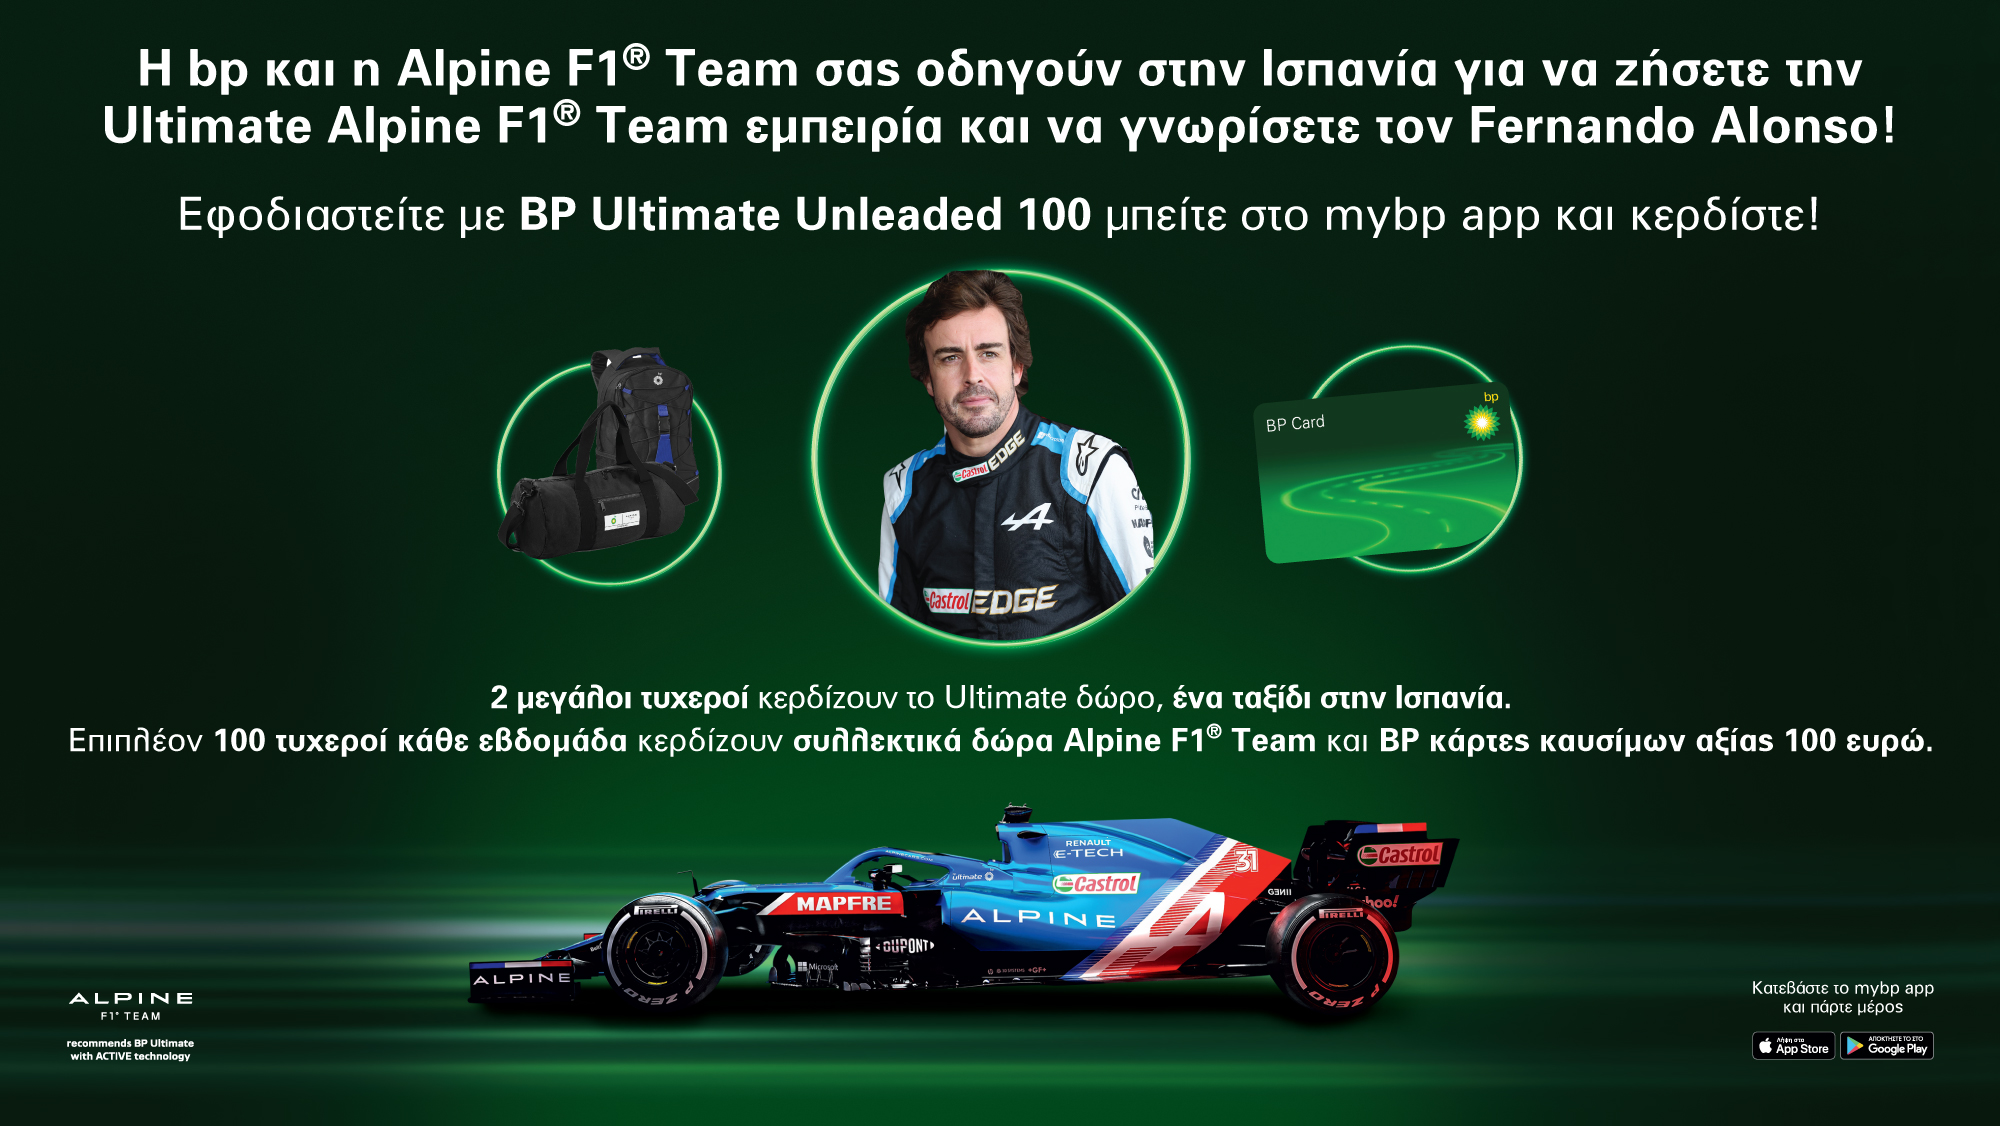 BP Ultimate Unleaded 100 - F1